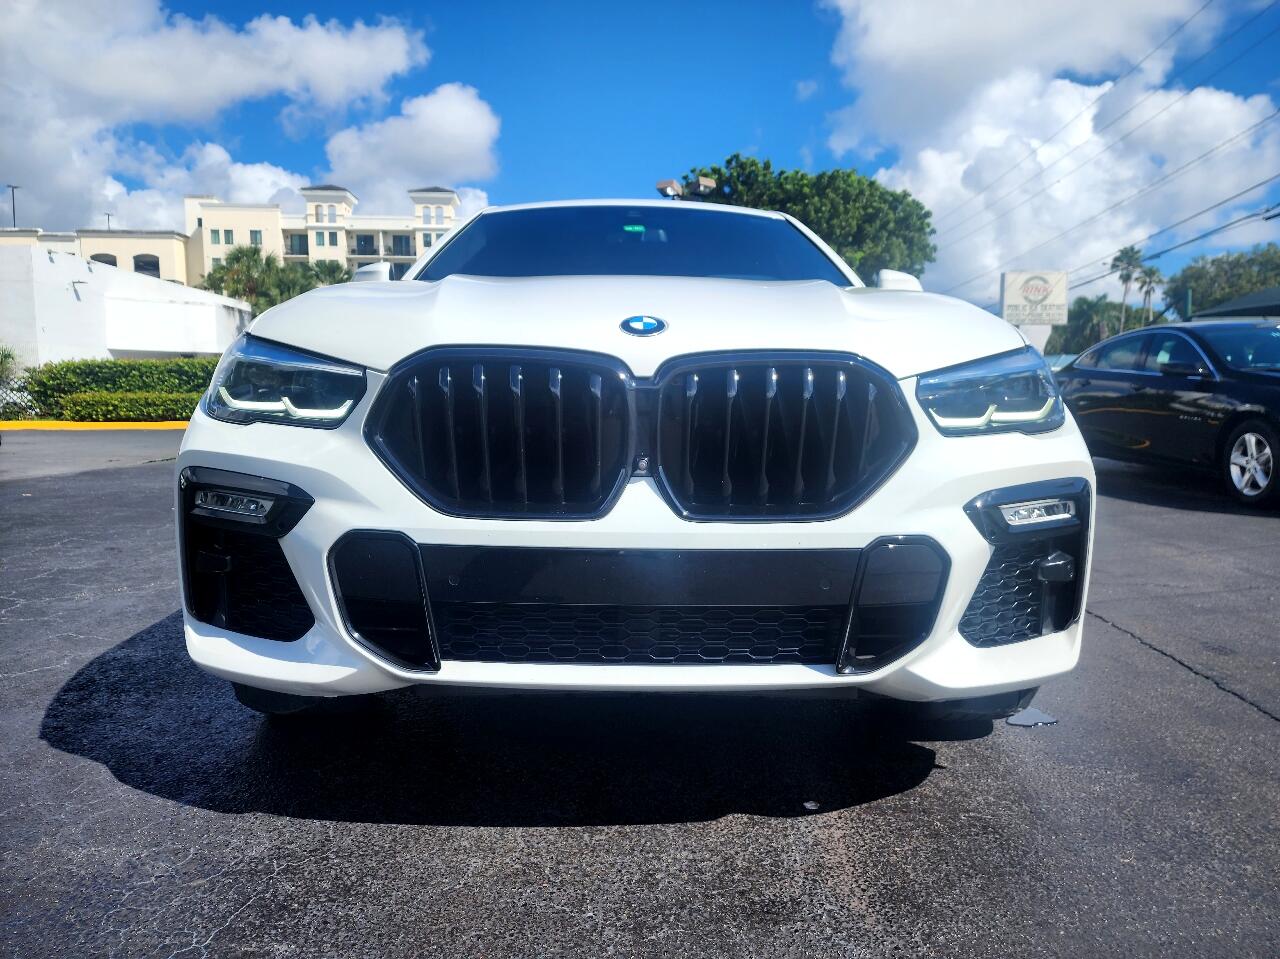 2021 BMW X6 SUV / Crossover - $56,999